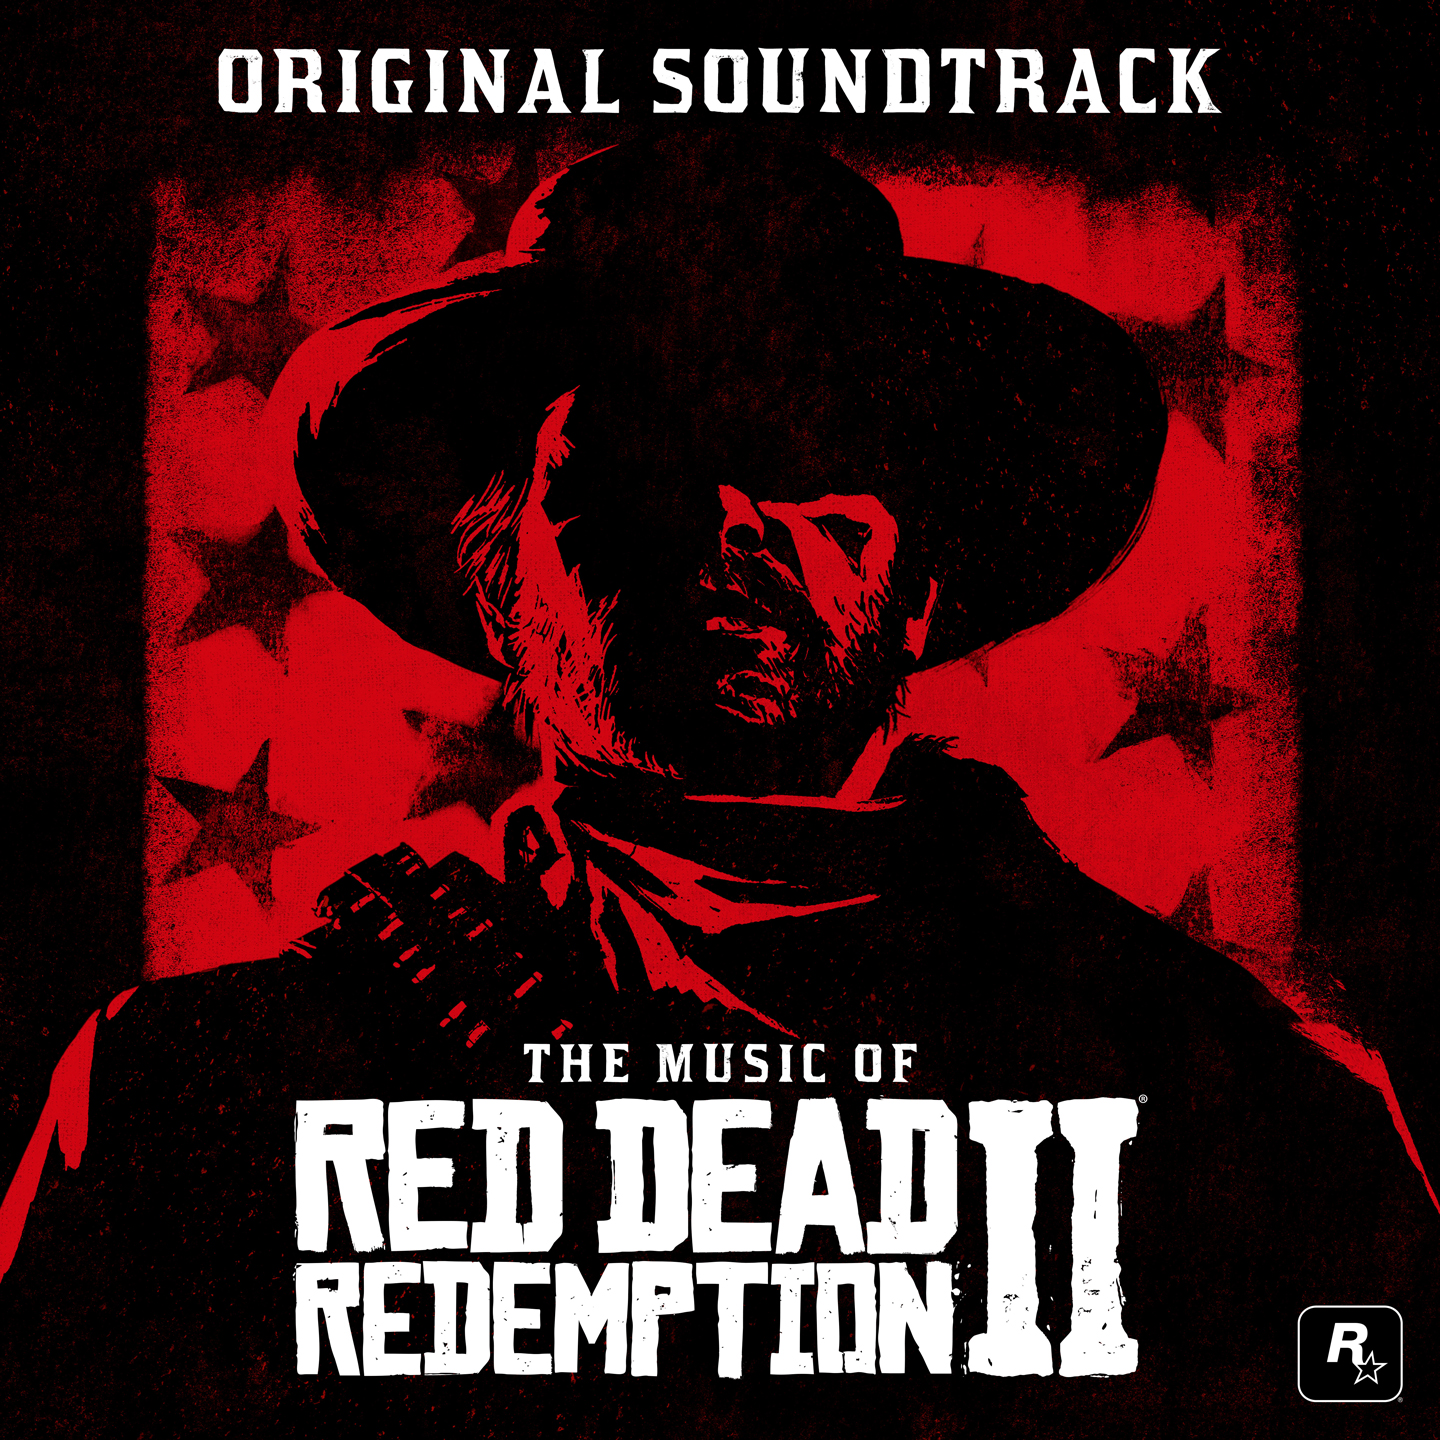 The Music Of Red Dead Redemption 2 Original Soundtrack 好評配信中 株式会社カプコンのプレスリリース